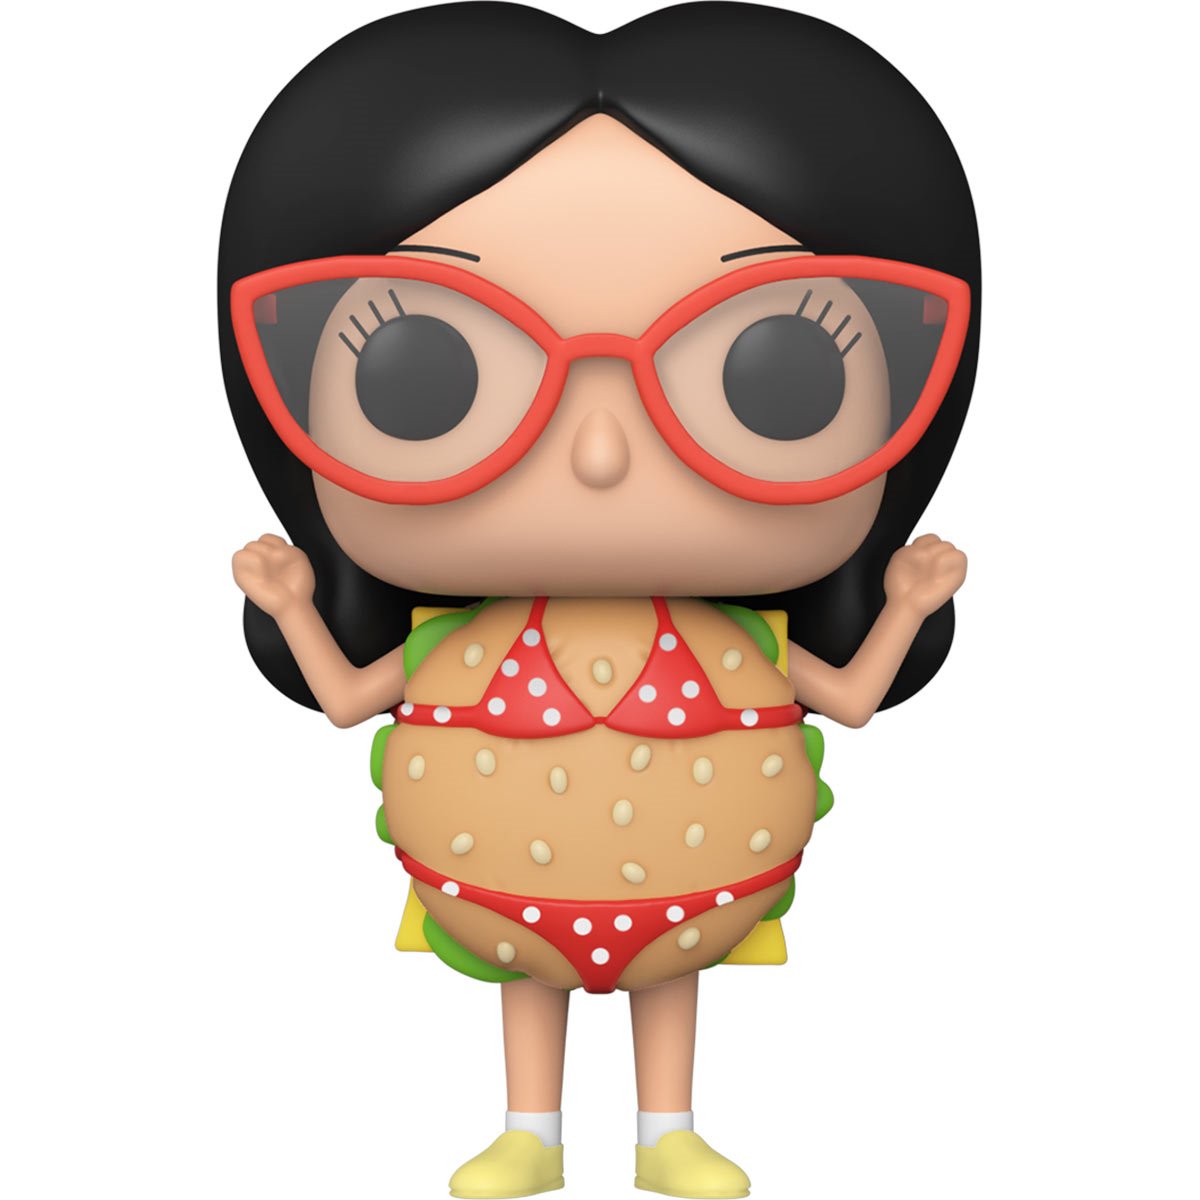 Funko Pop Animation: Bobs Burgers - Linda Bikini Burger